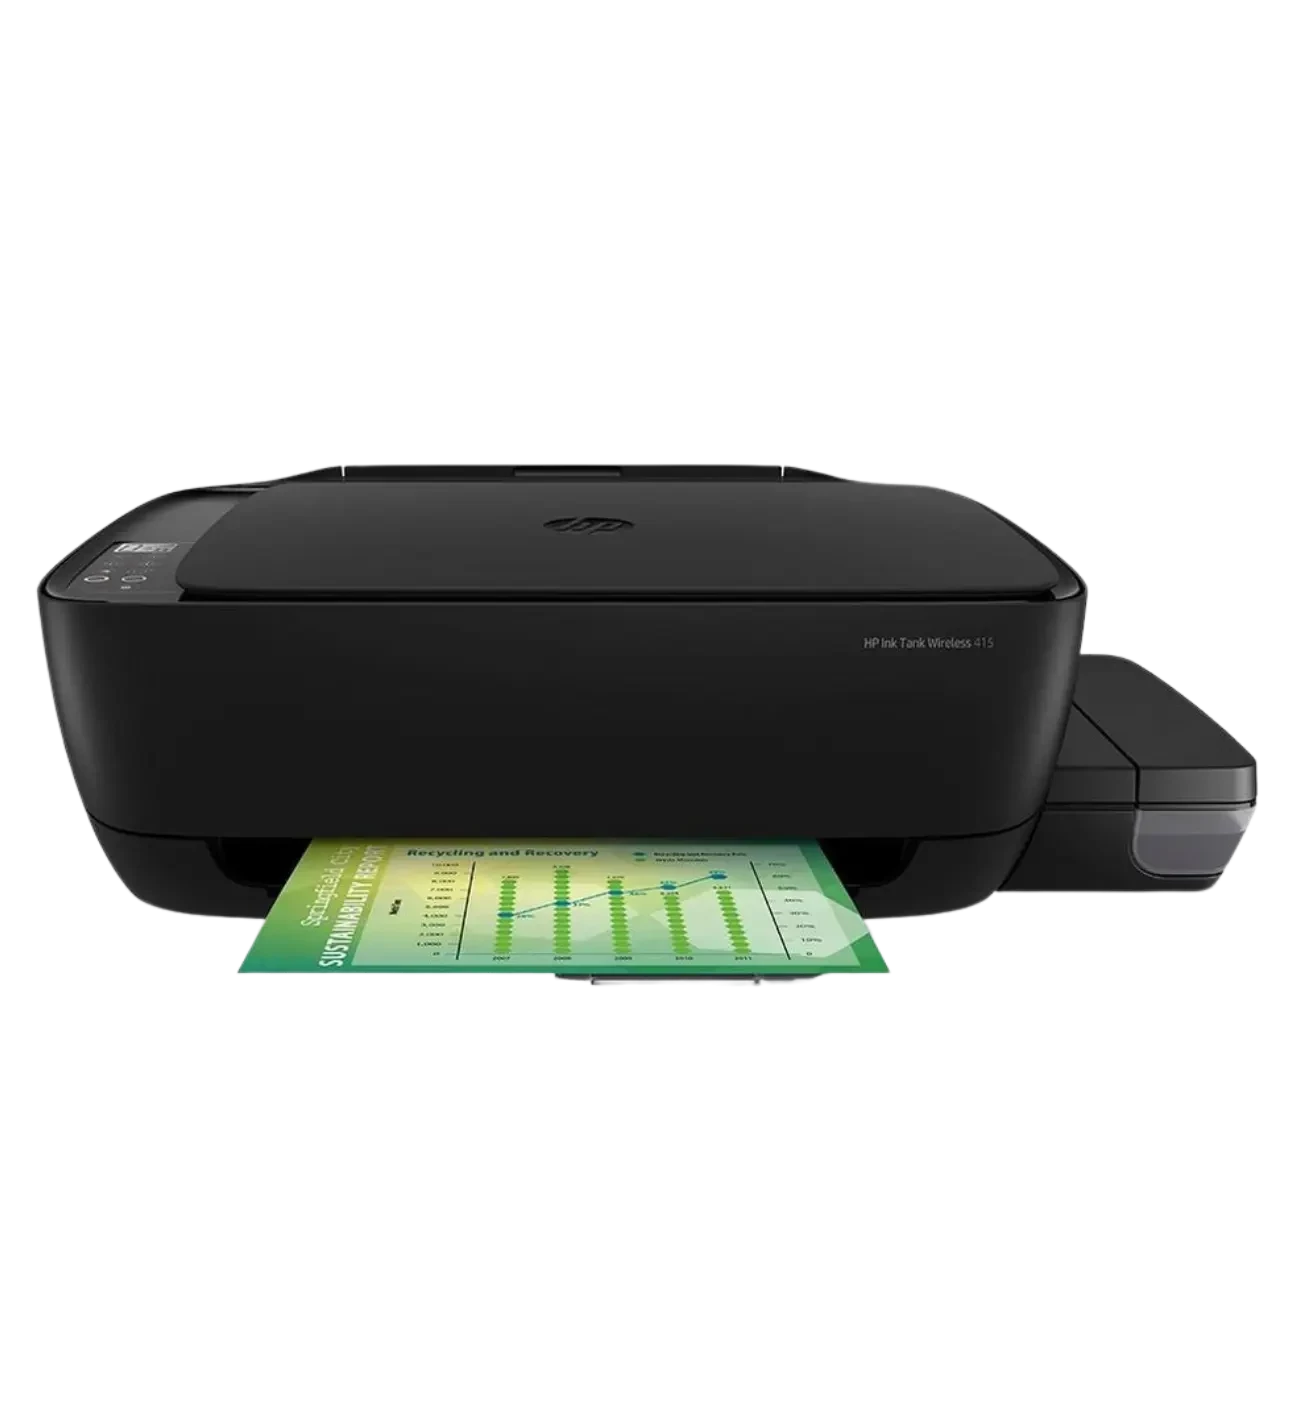 HP Ink Tank Wireless 415 All In One Printer - Print, Copy, Scan,Black